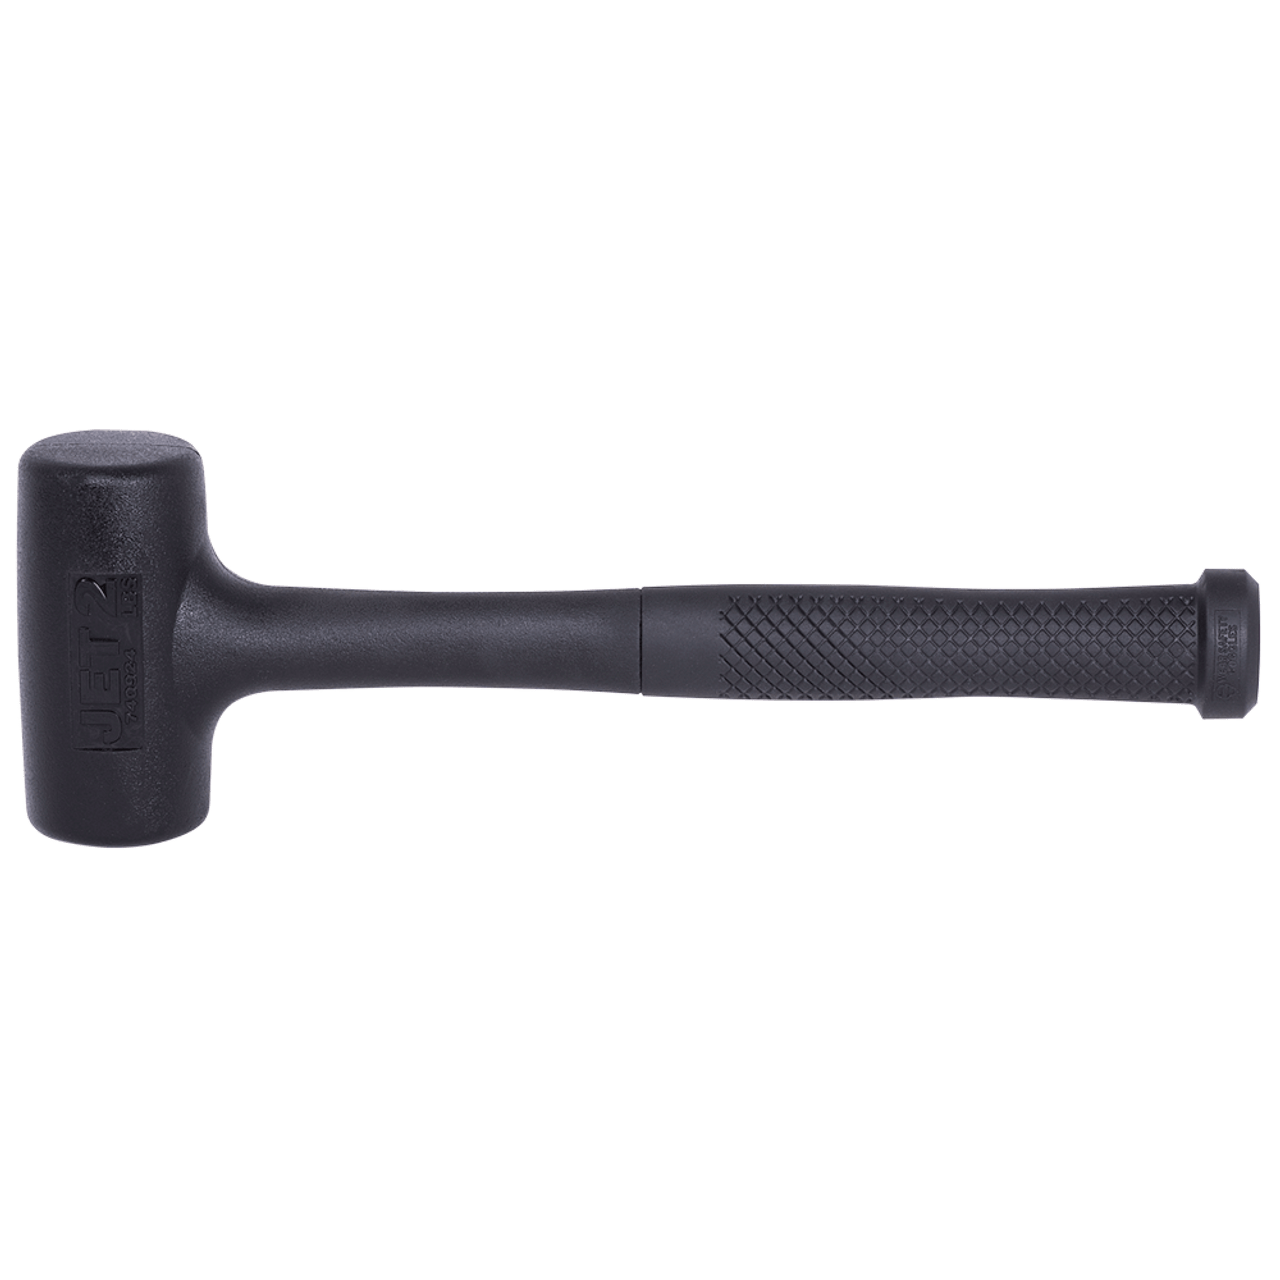 3 lb. Dead Blow Sledge Hammer 740925